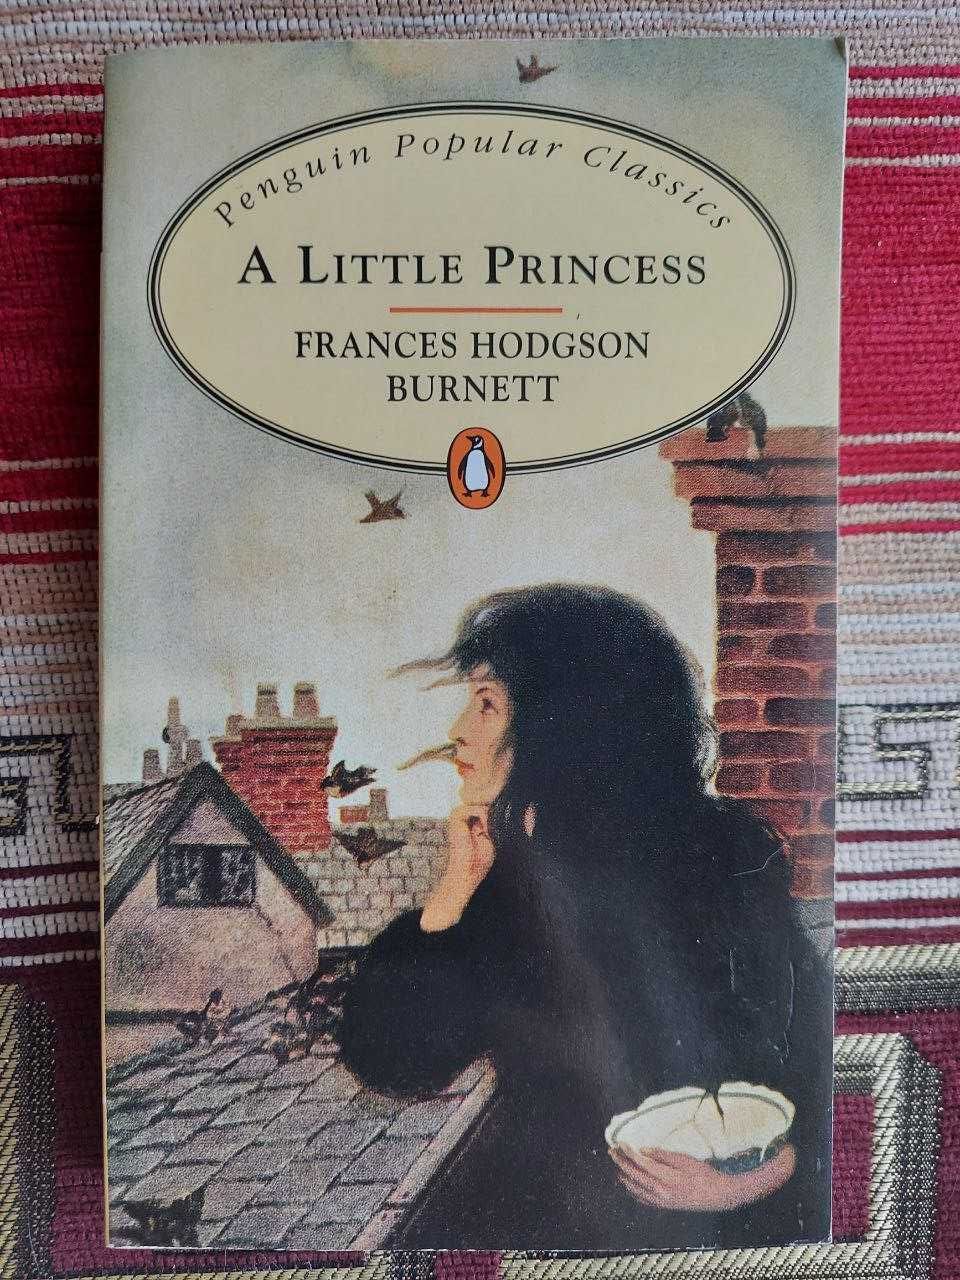 "The Little Princess" (Penguin Popular Classics)